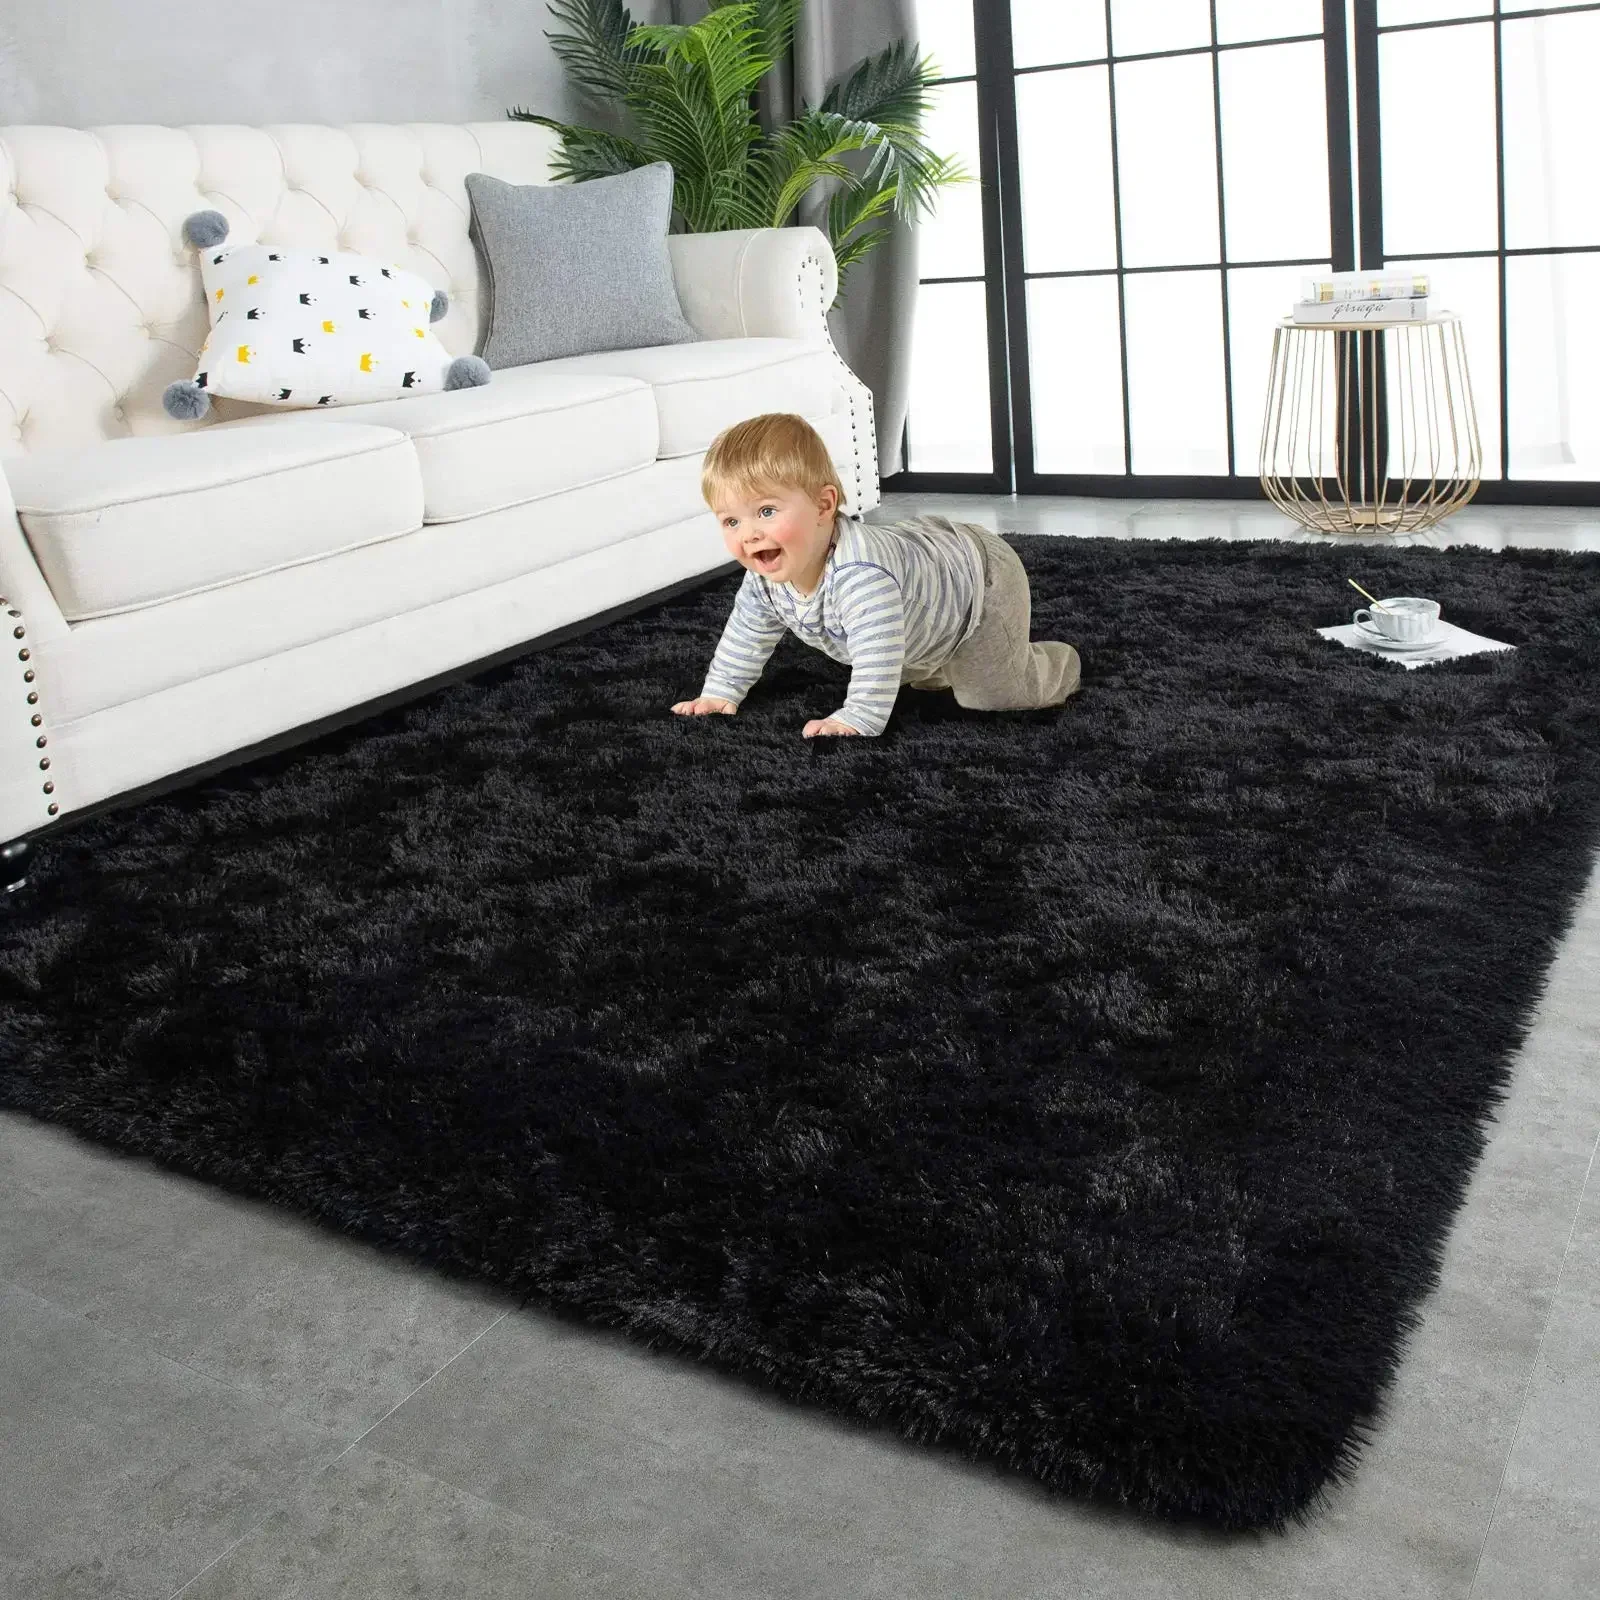 

TWINNIS Super Soft Shaggy/ Fluffy Carpets, 8x10 Feet, Indoor Modern Plush Area Rugs for Living Room Bedroom Kids Room Nursery Ho